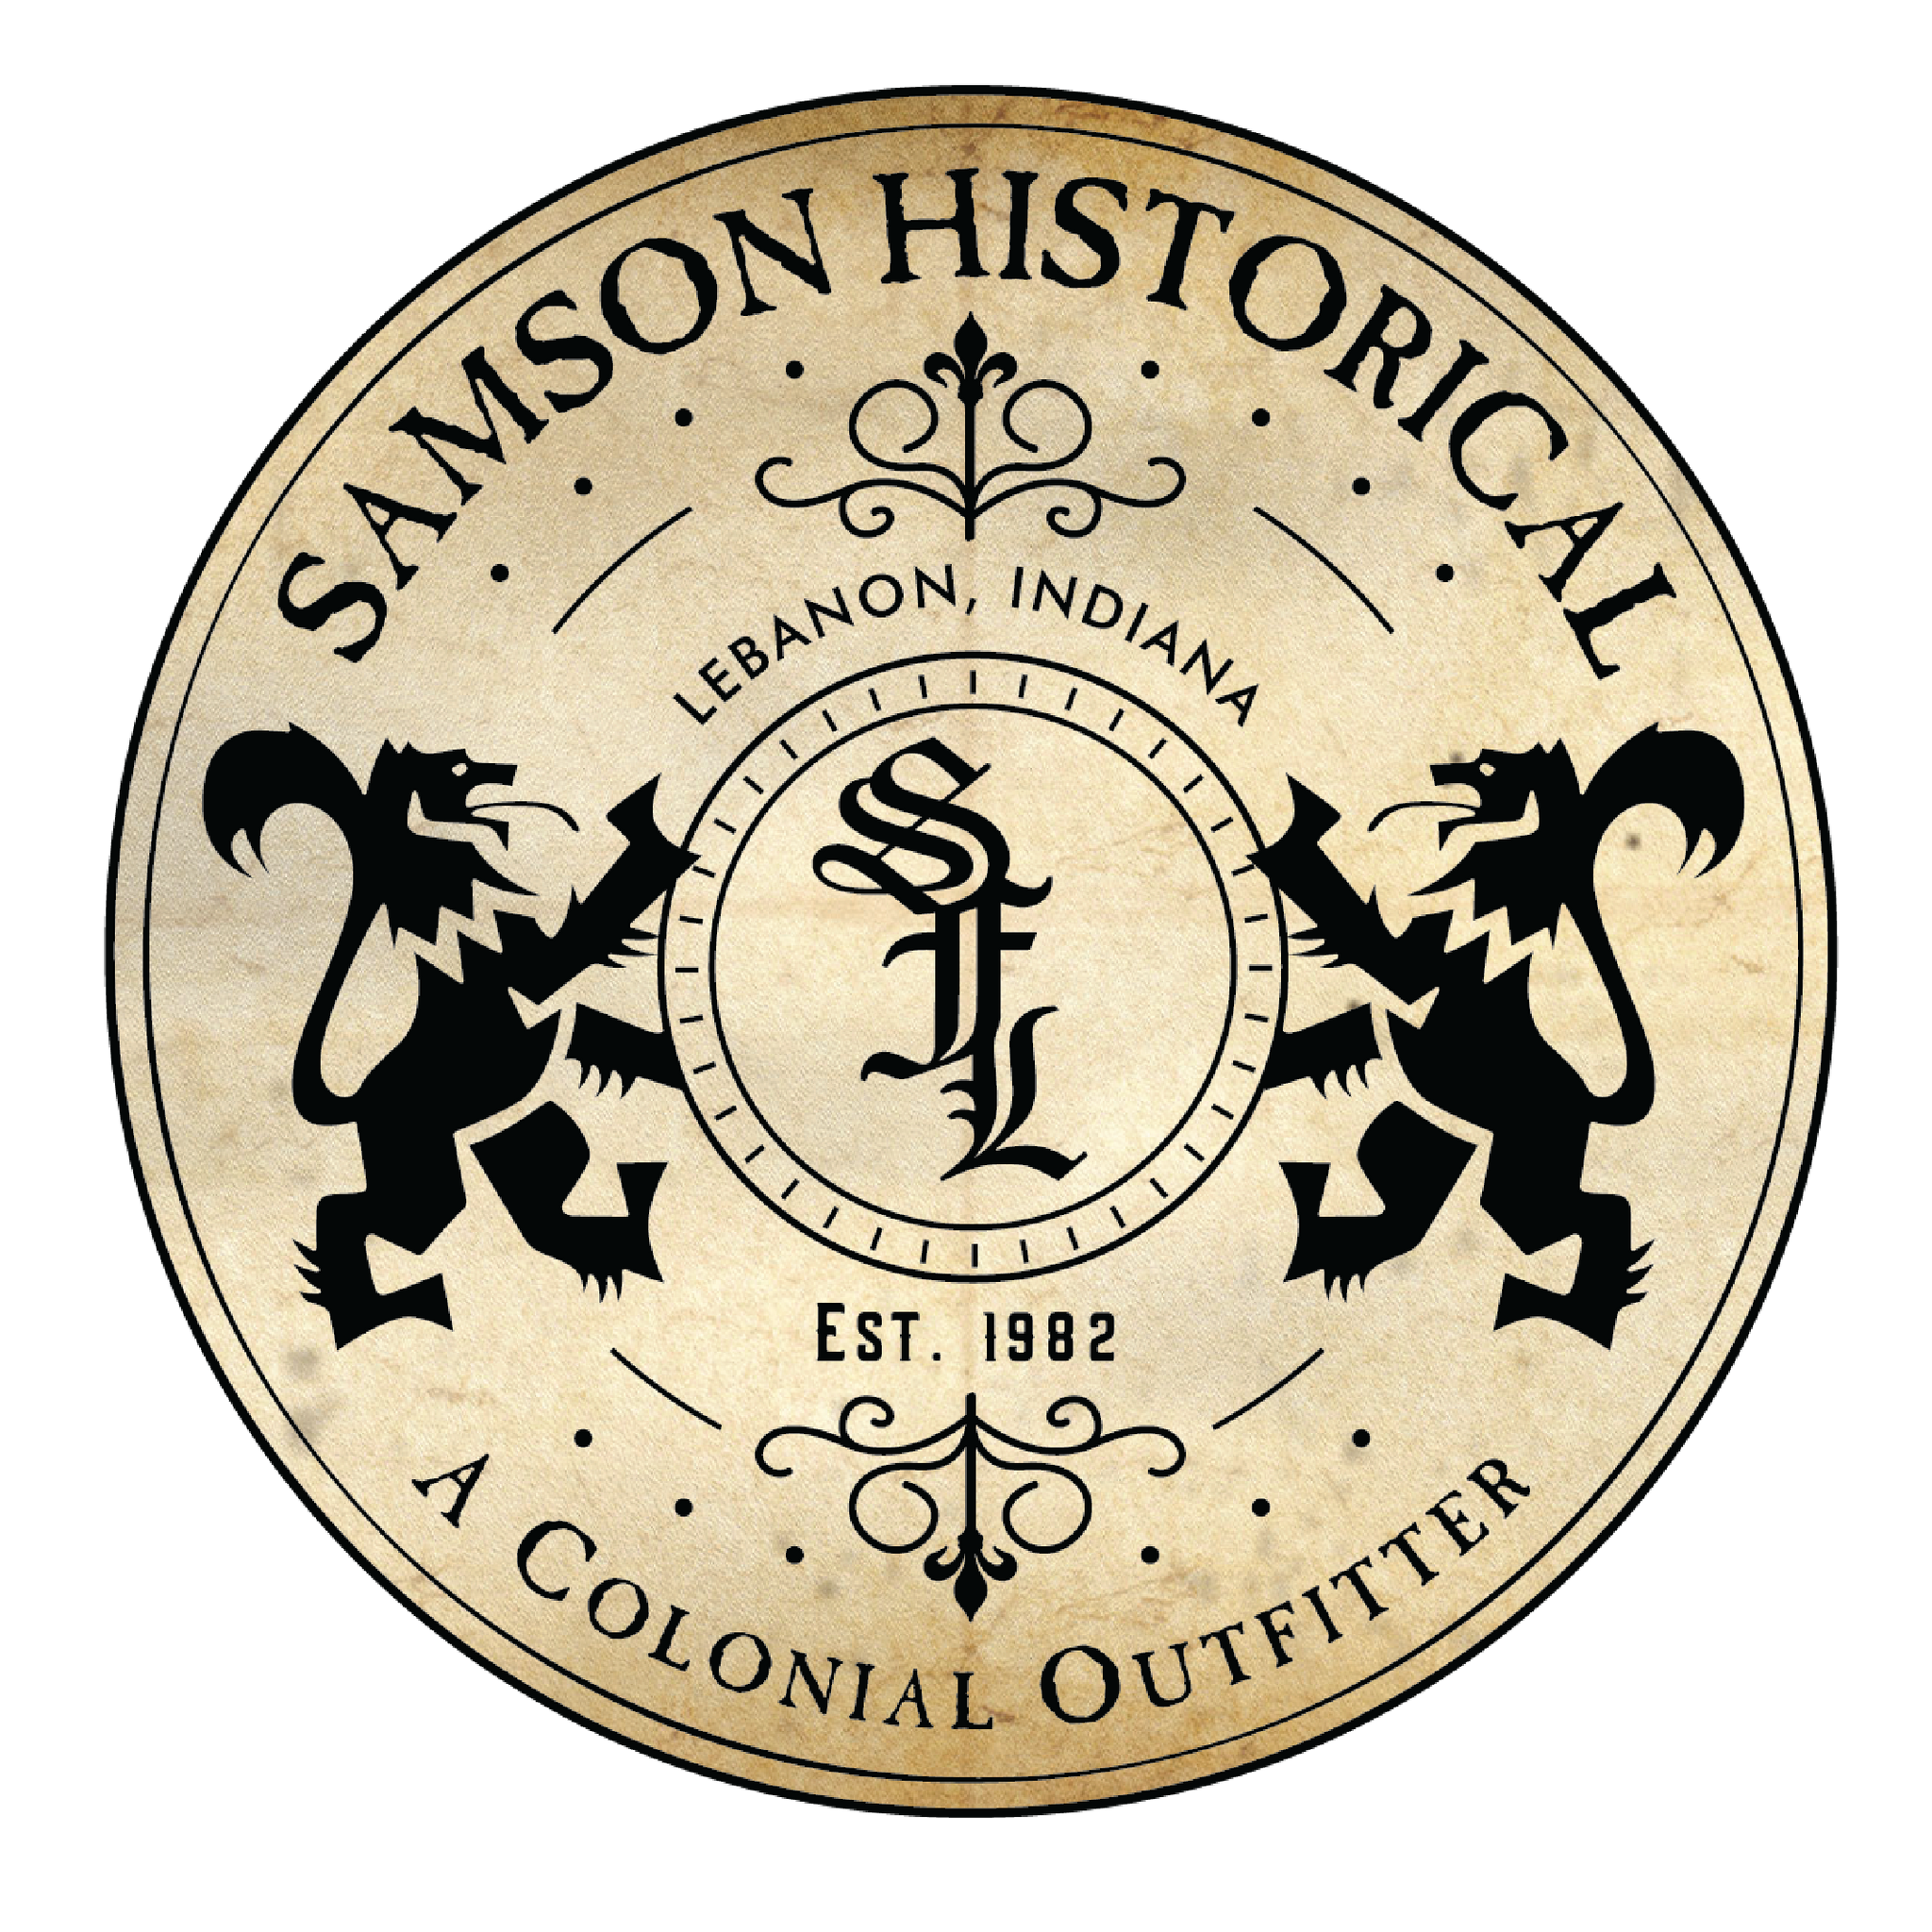 Mini Cast Iron Cookpot - Samson Historical